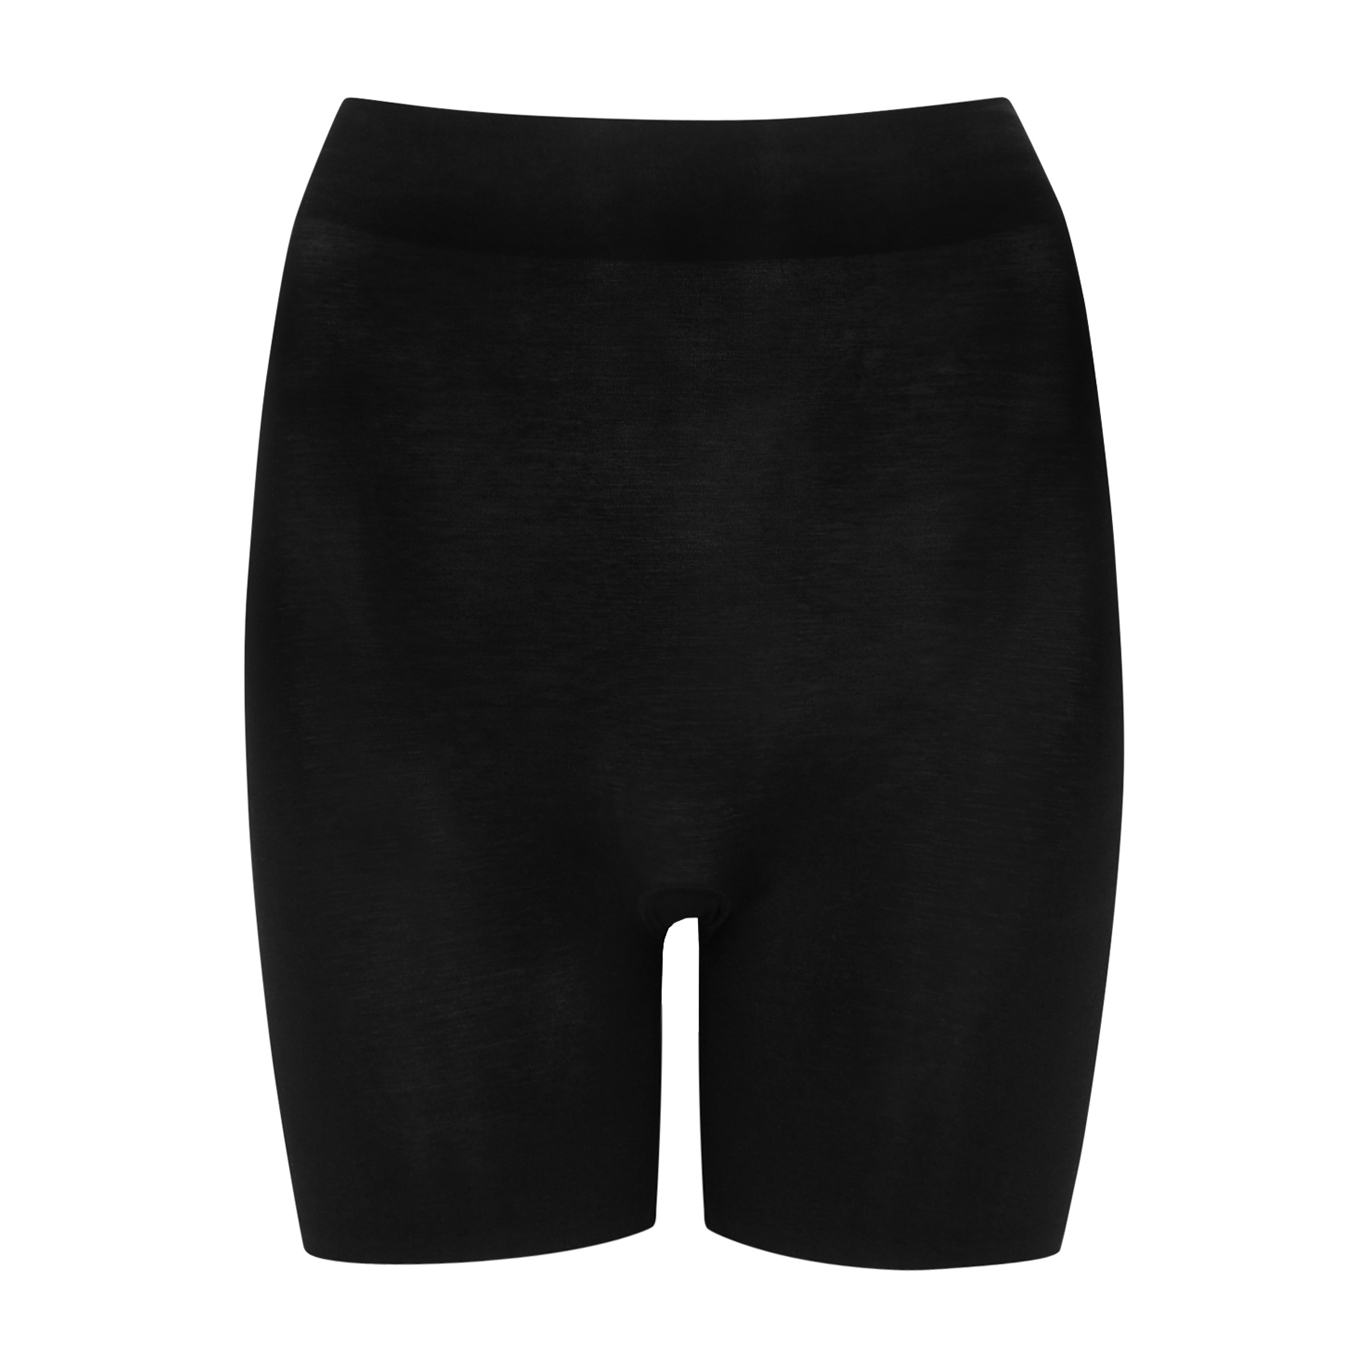 Wolford Black Stretch Cotton Control Shorts - 6